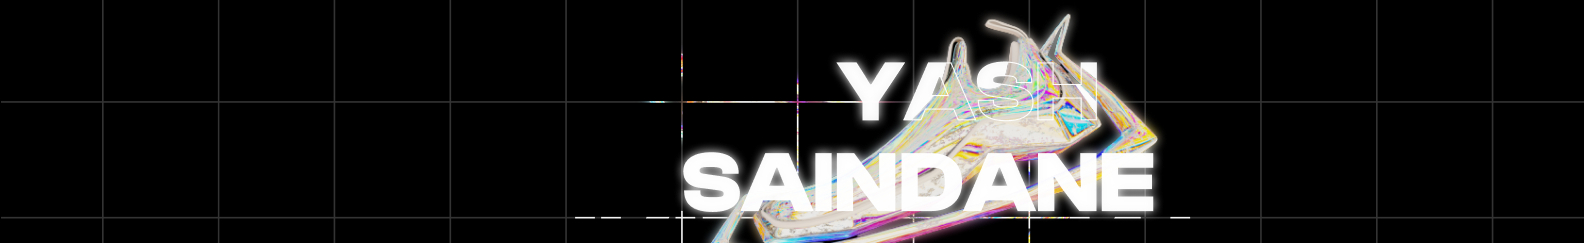 Yash Saindane's profile banner